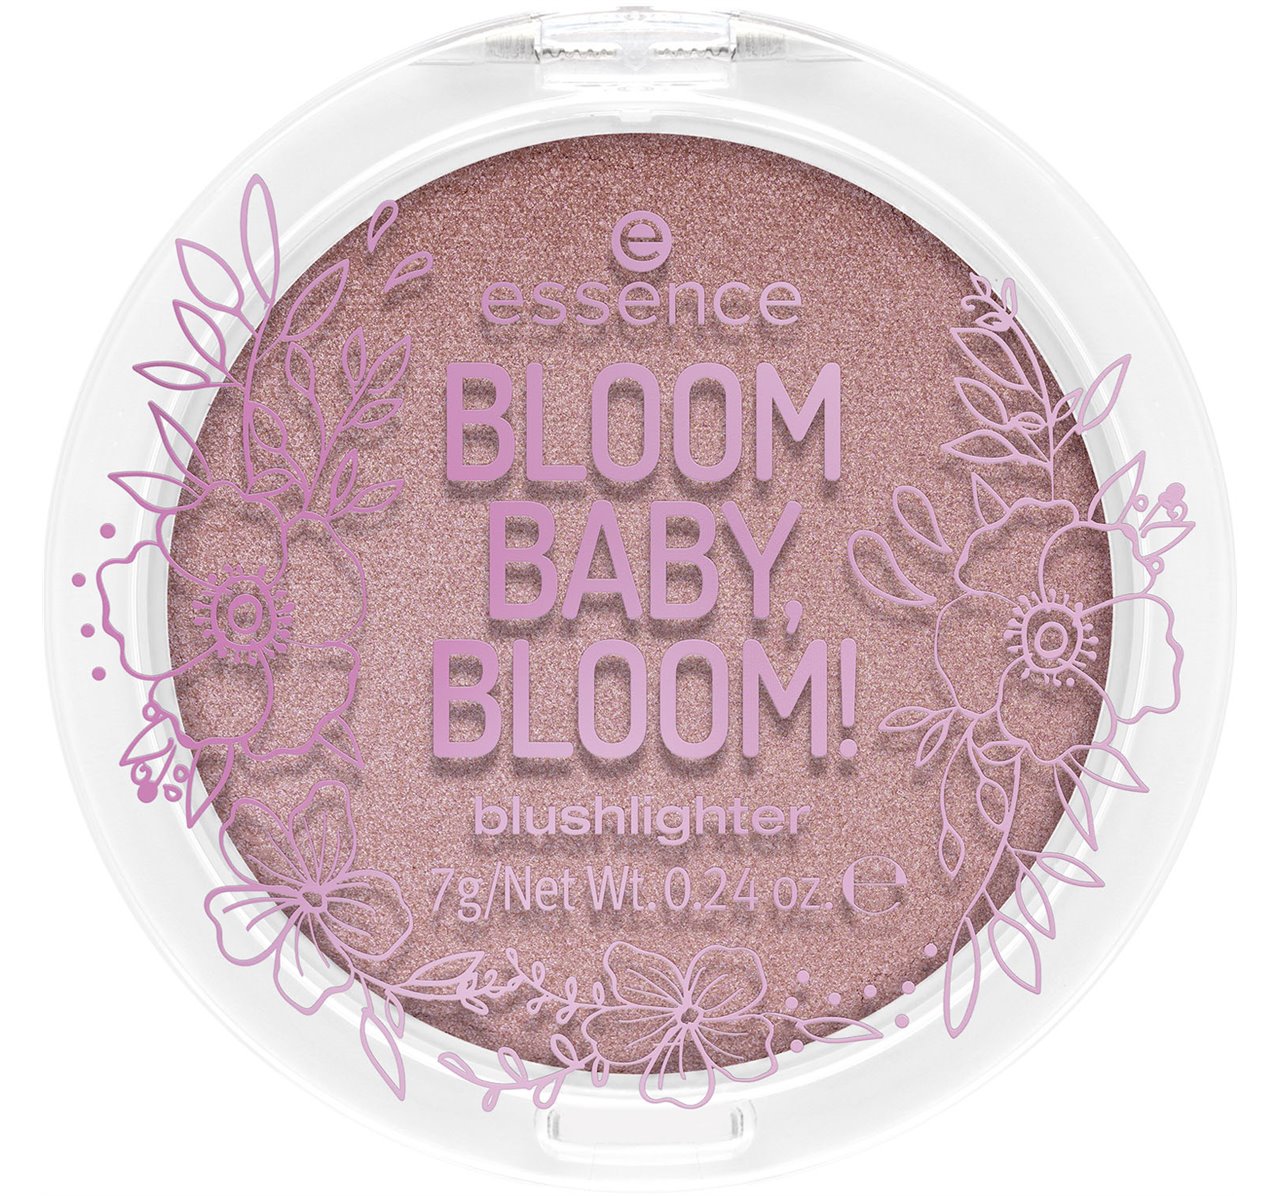 Lilac BLOOM! blushlighter 7g 01 You! BABY, essence BLOOM I